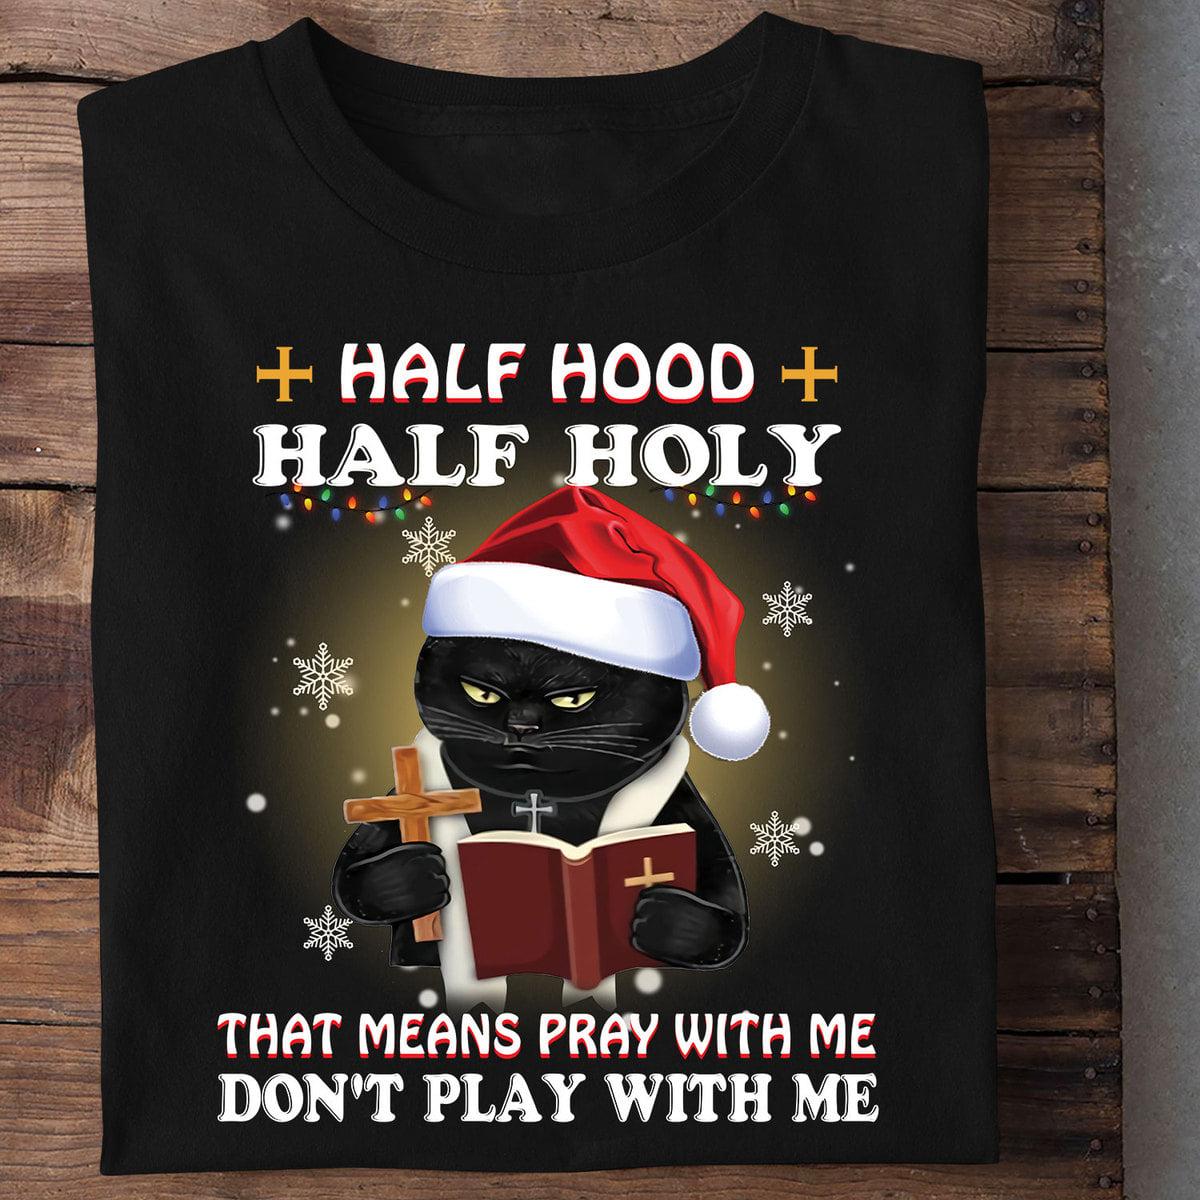 Half hood half holy - Jesus holy bible, black cat and cross, believe in Jesus